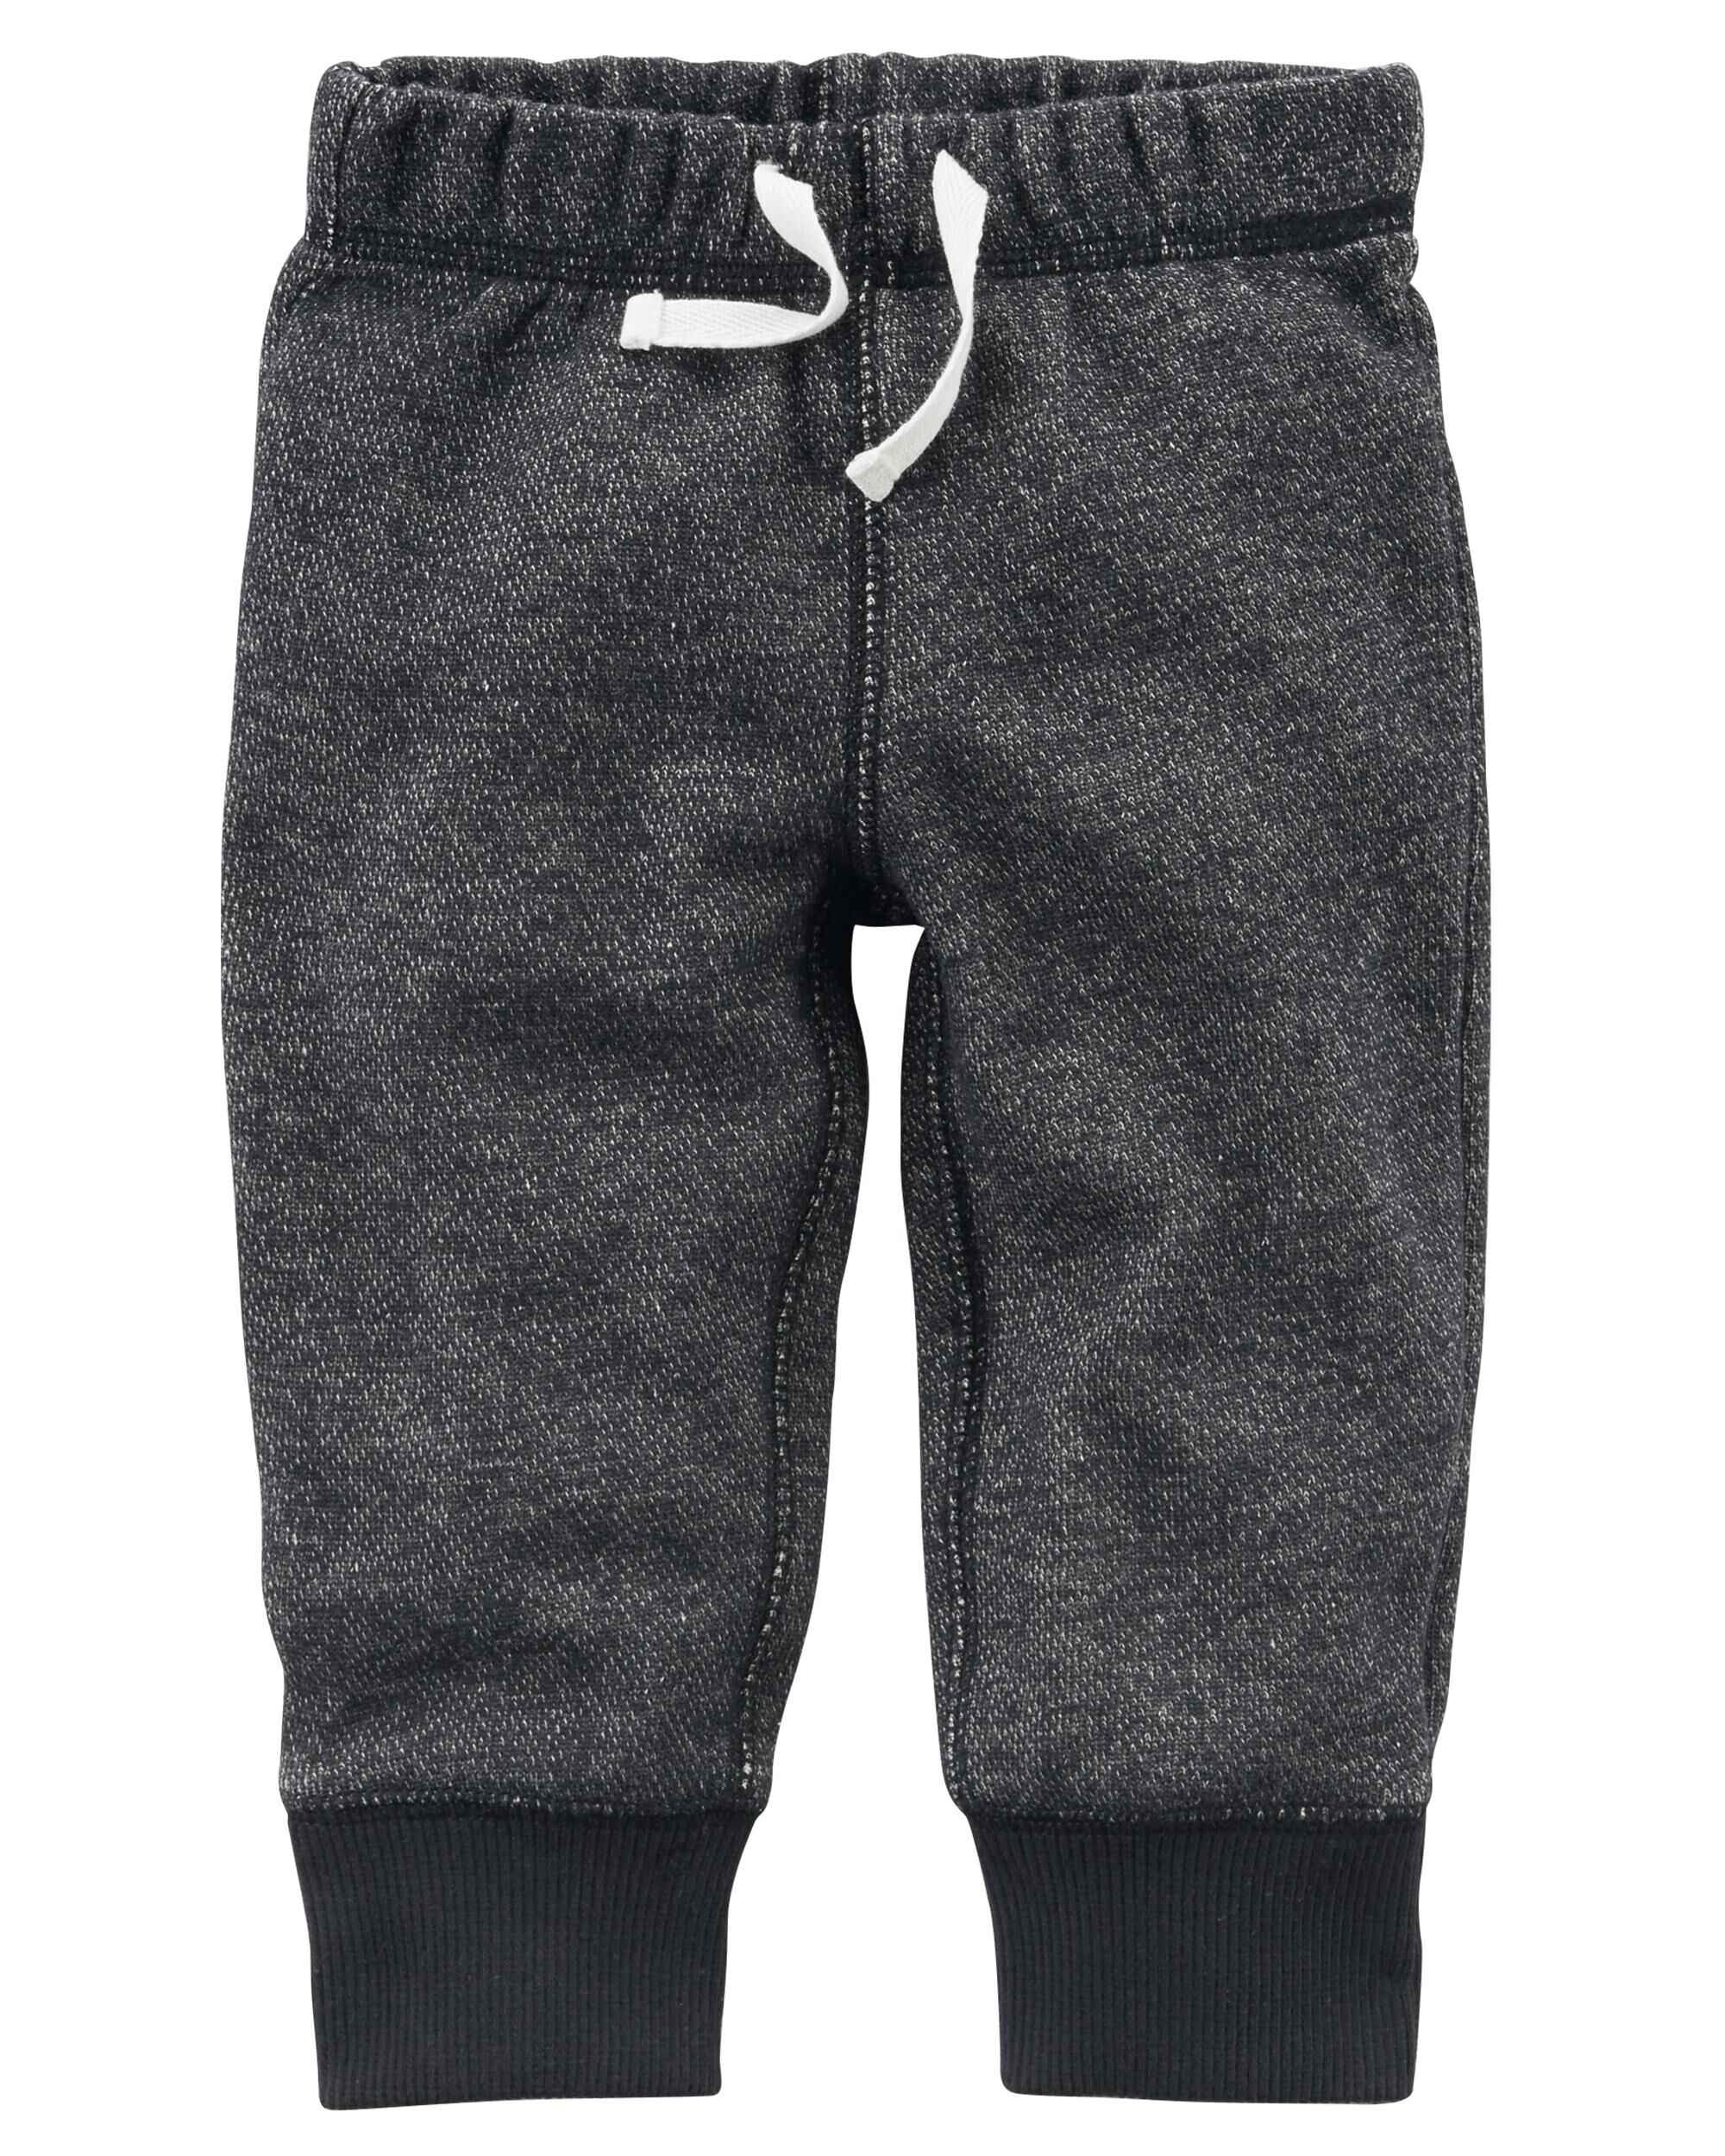 carter's fleece lined pants